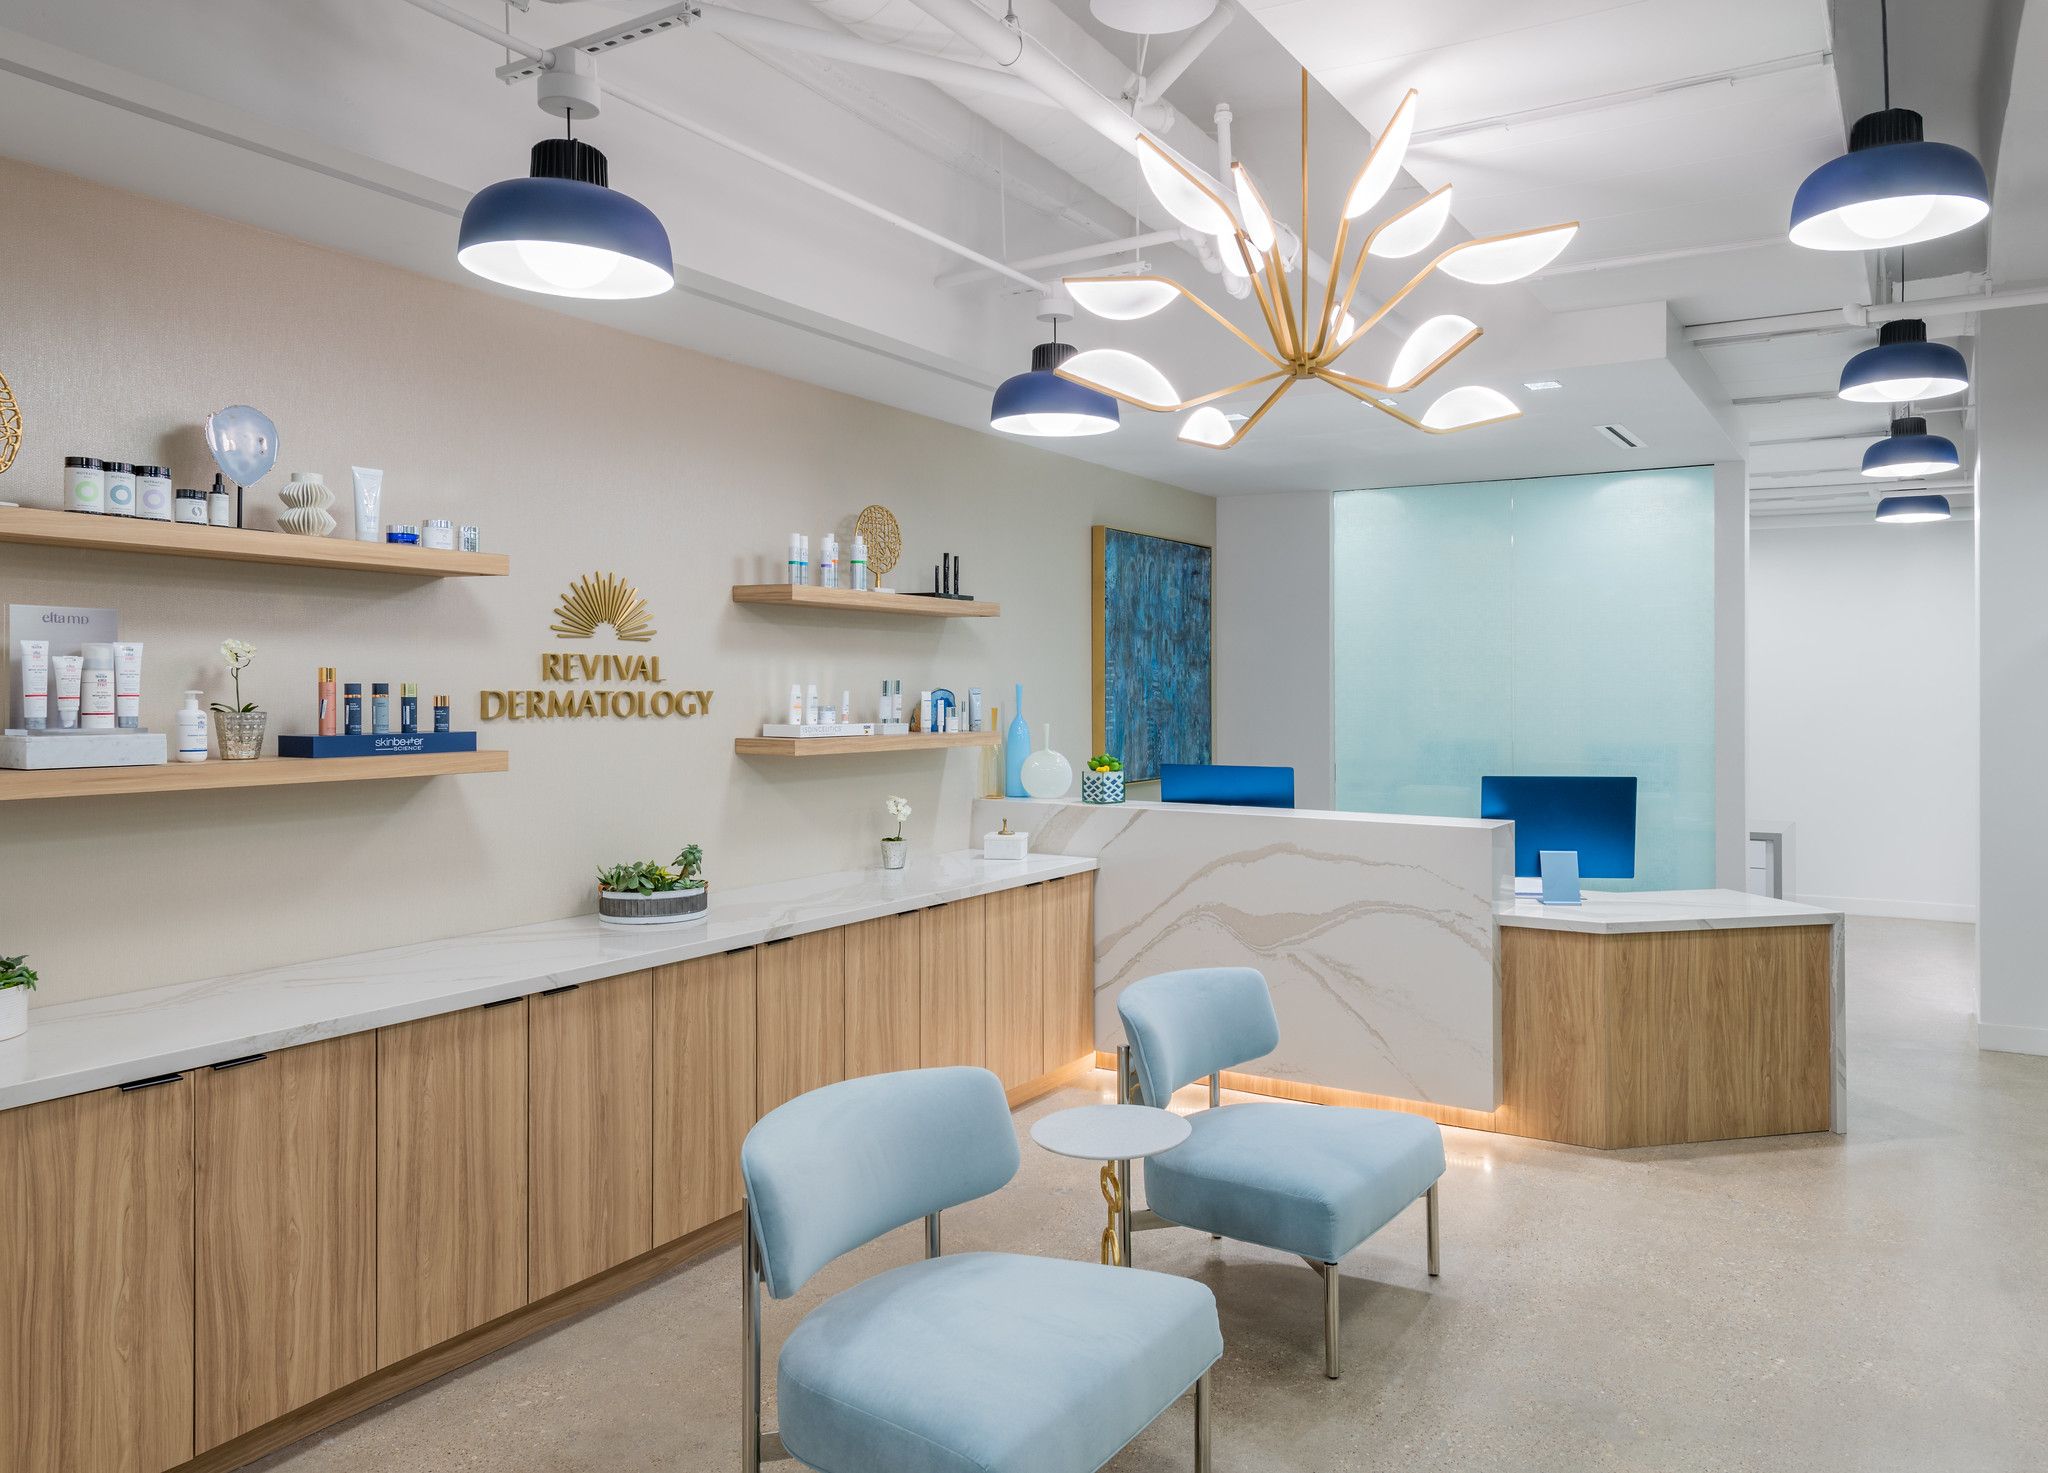 Revival Dermatology Lobby